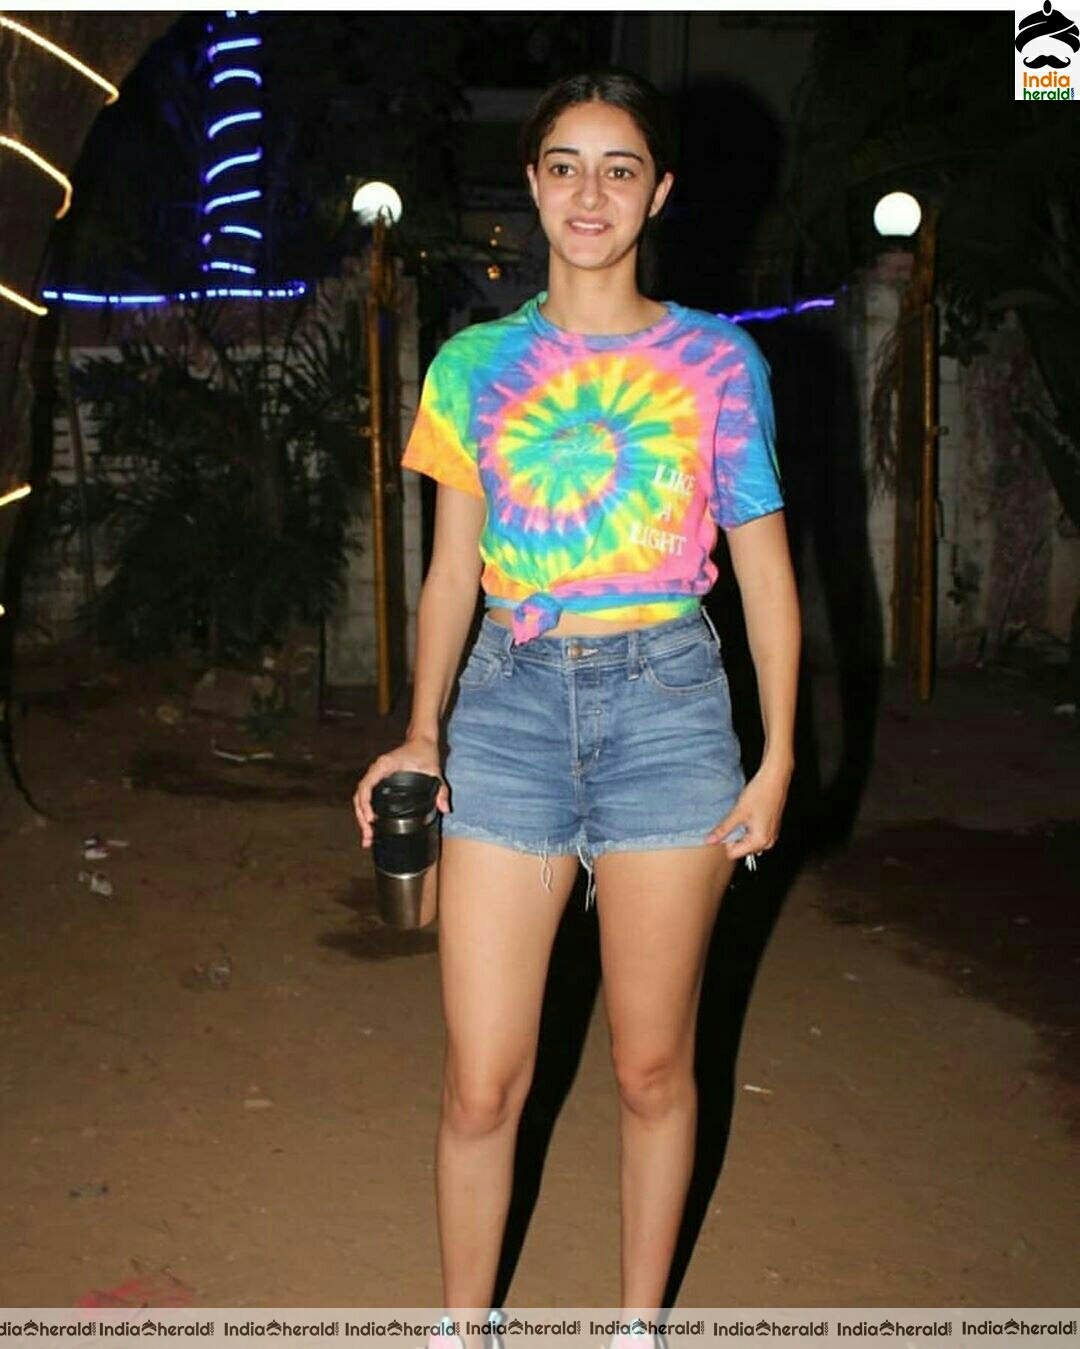 Ananya Pandey caught by paparazzi in short denim shorts